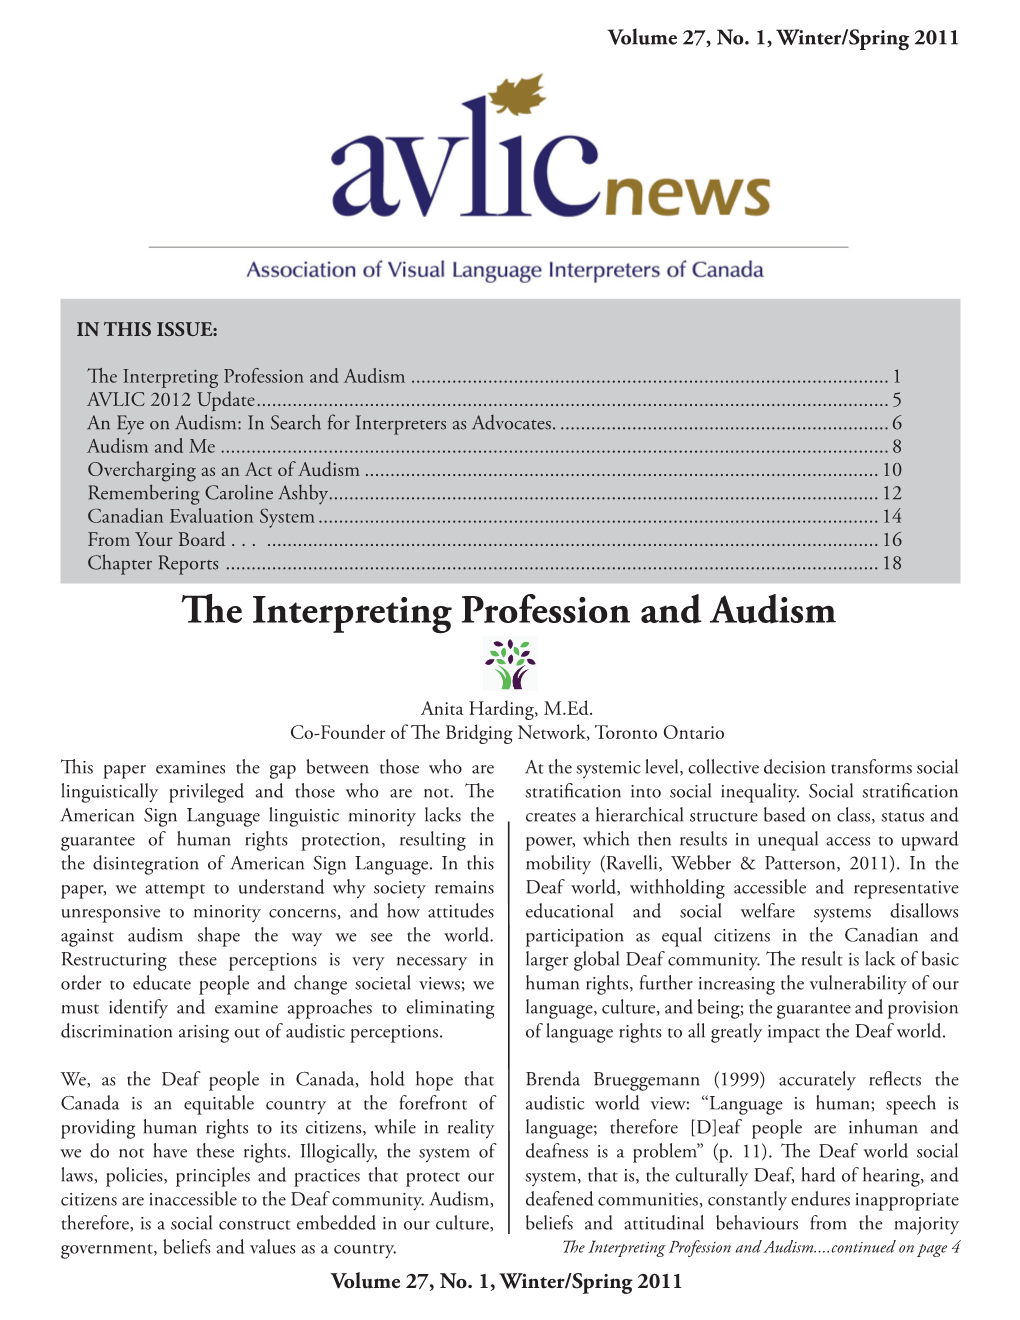 E Interpreting Profession and Audism